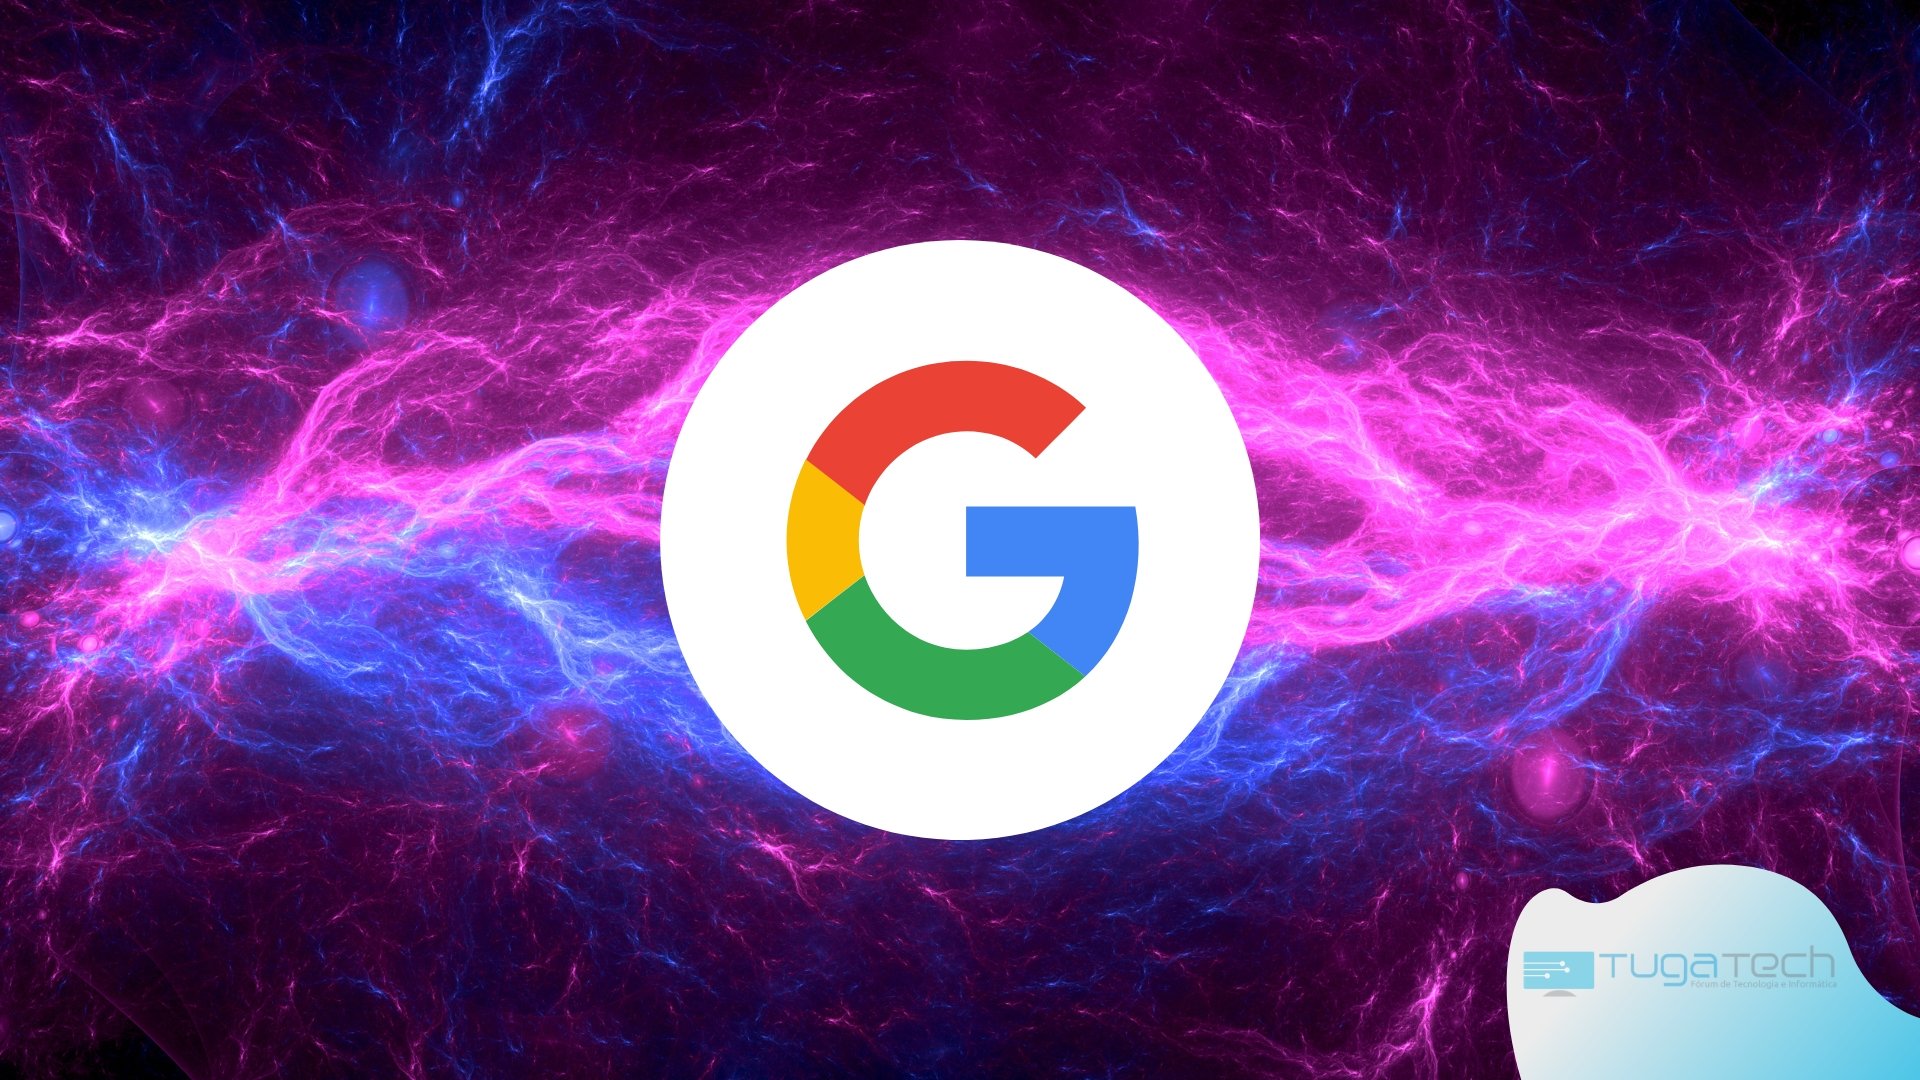 Google sobre raios de energia